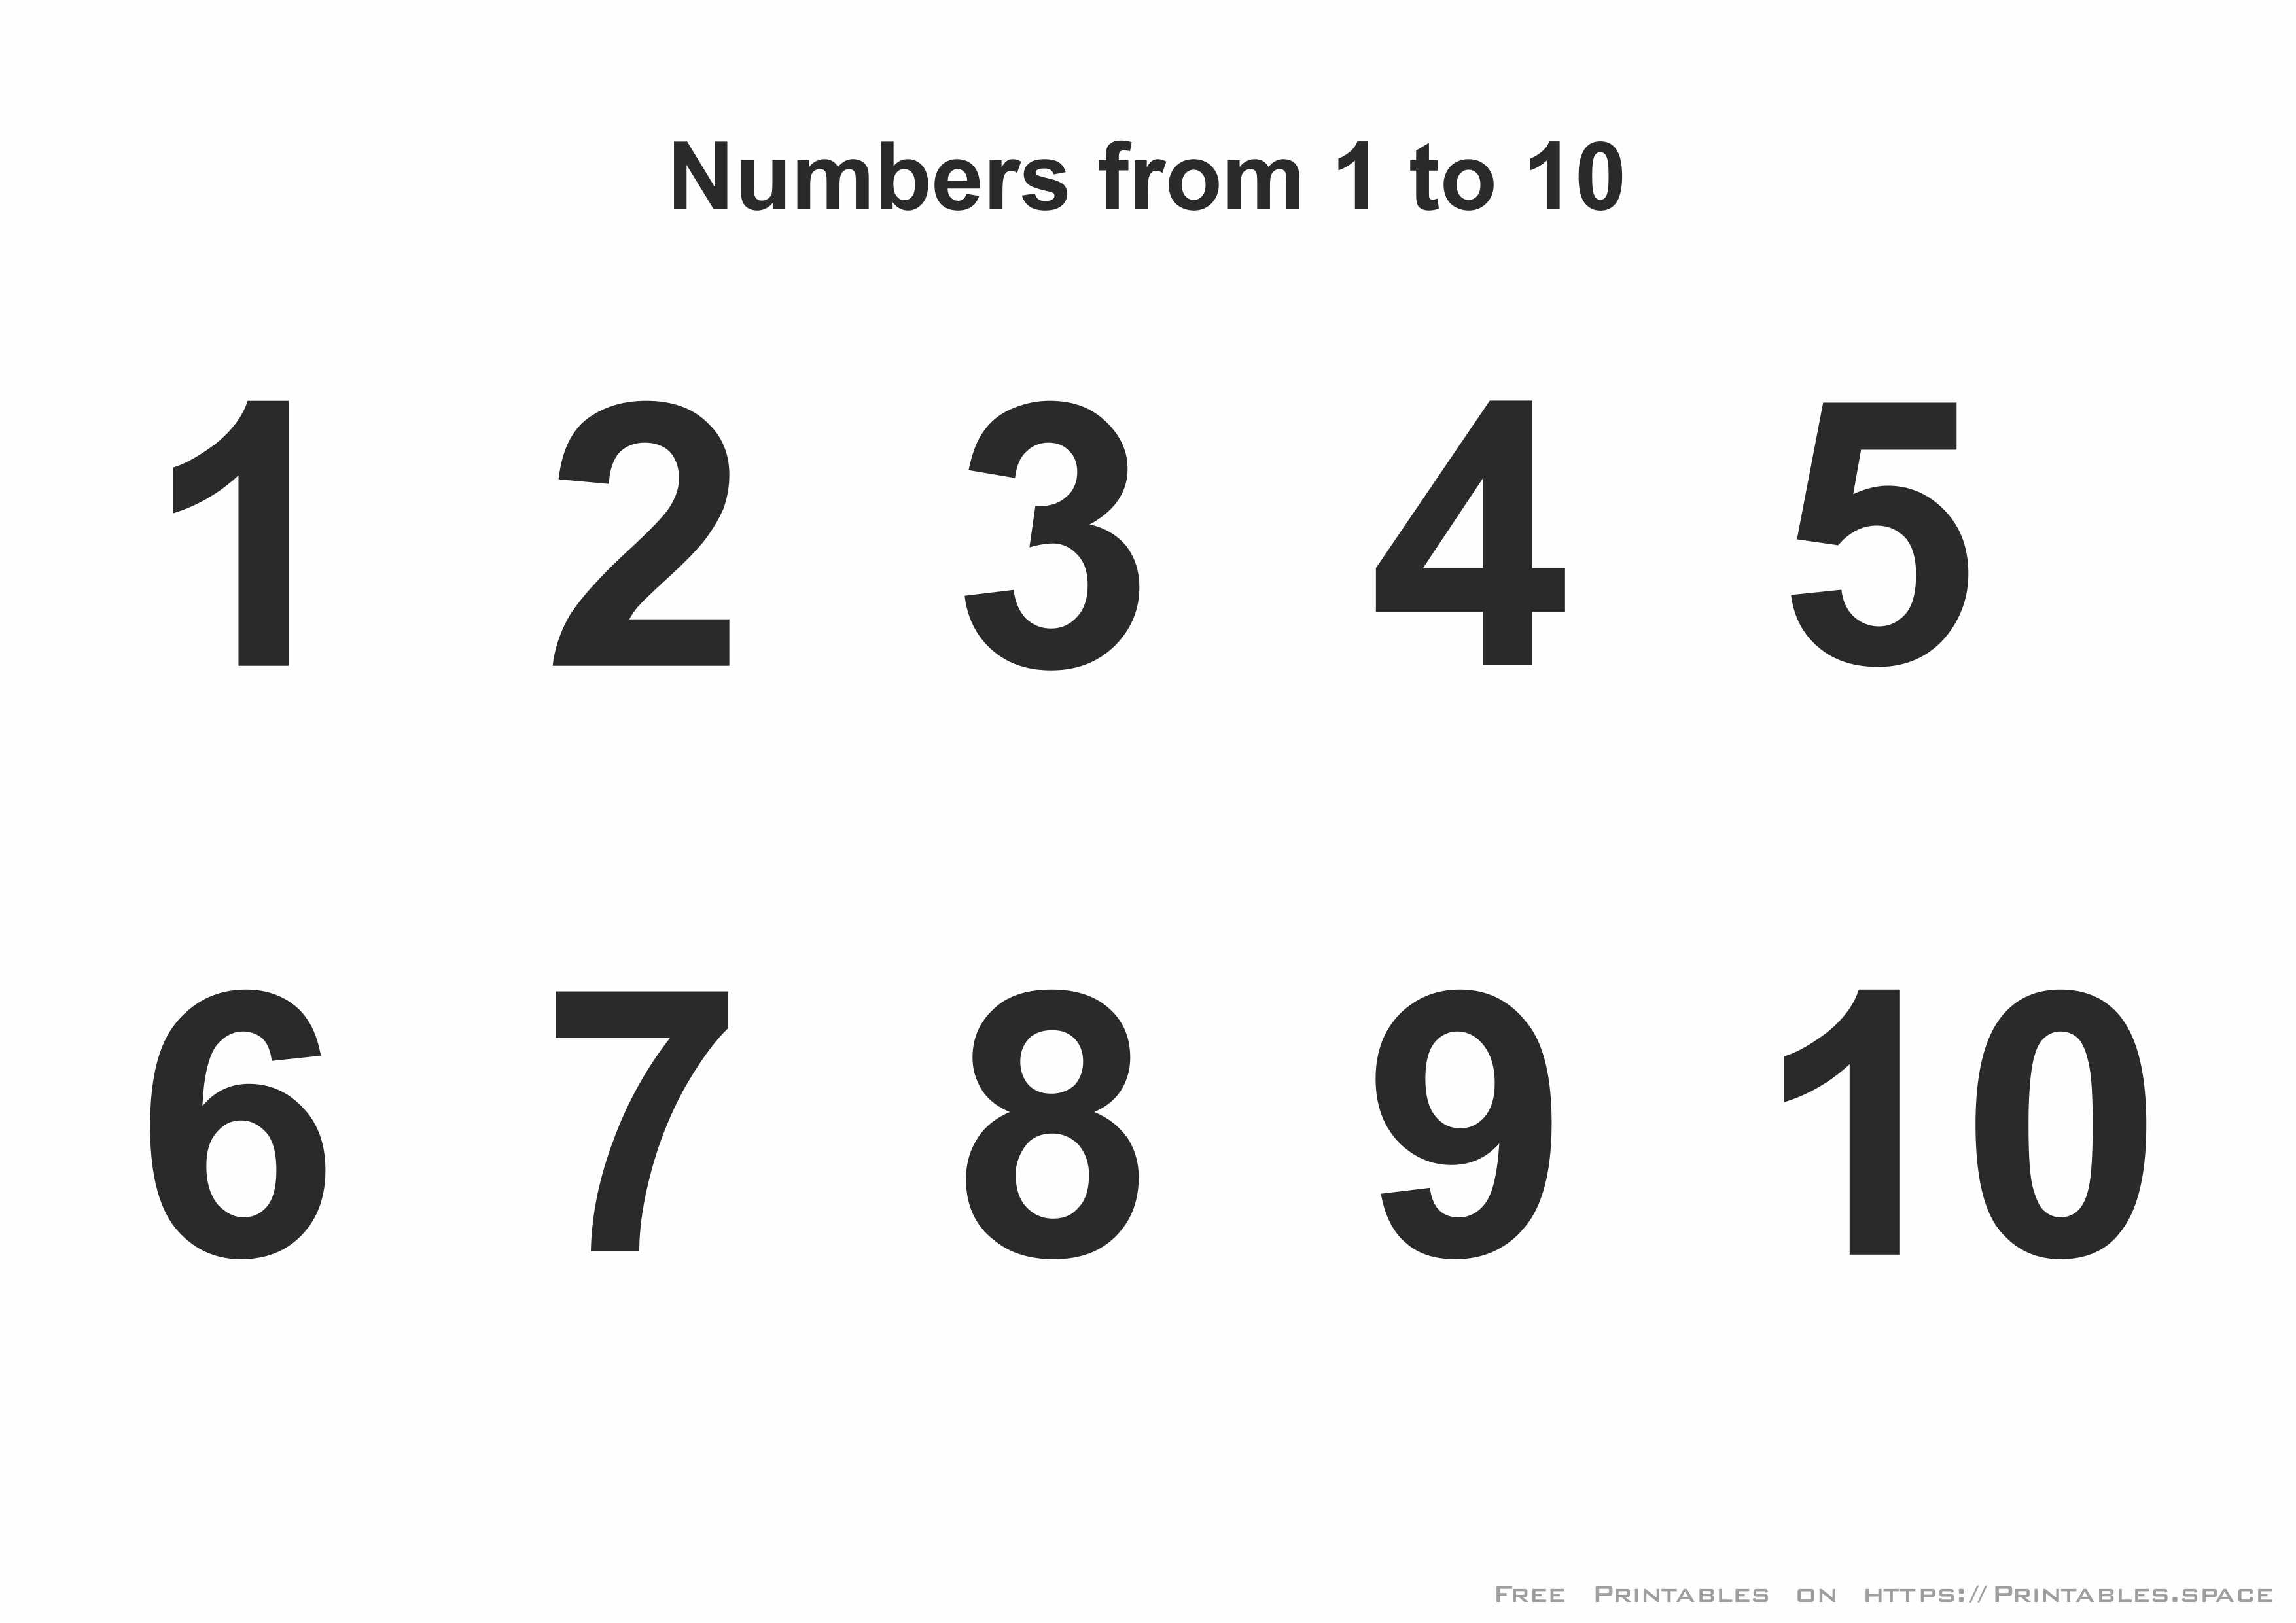 1 номер от 1 до 45. Цифры 1-10. Числа 1-10. Цифры от 1 до 10. Числа до 10.